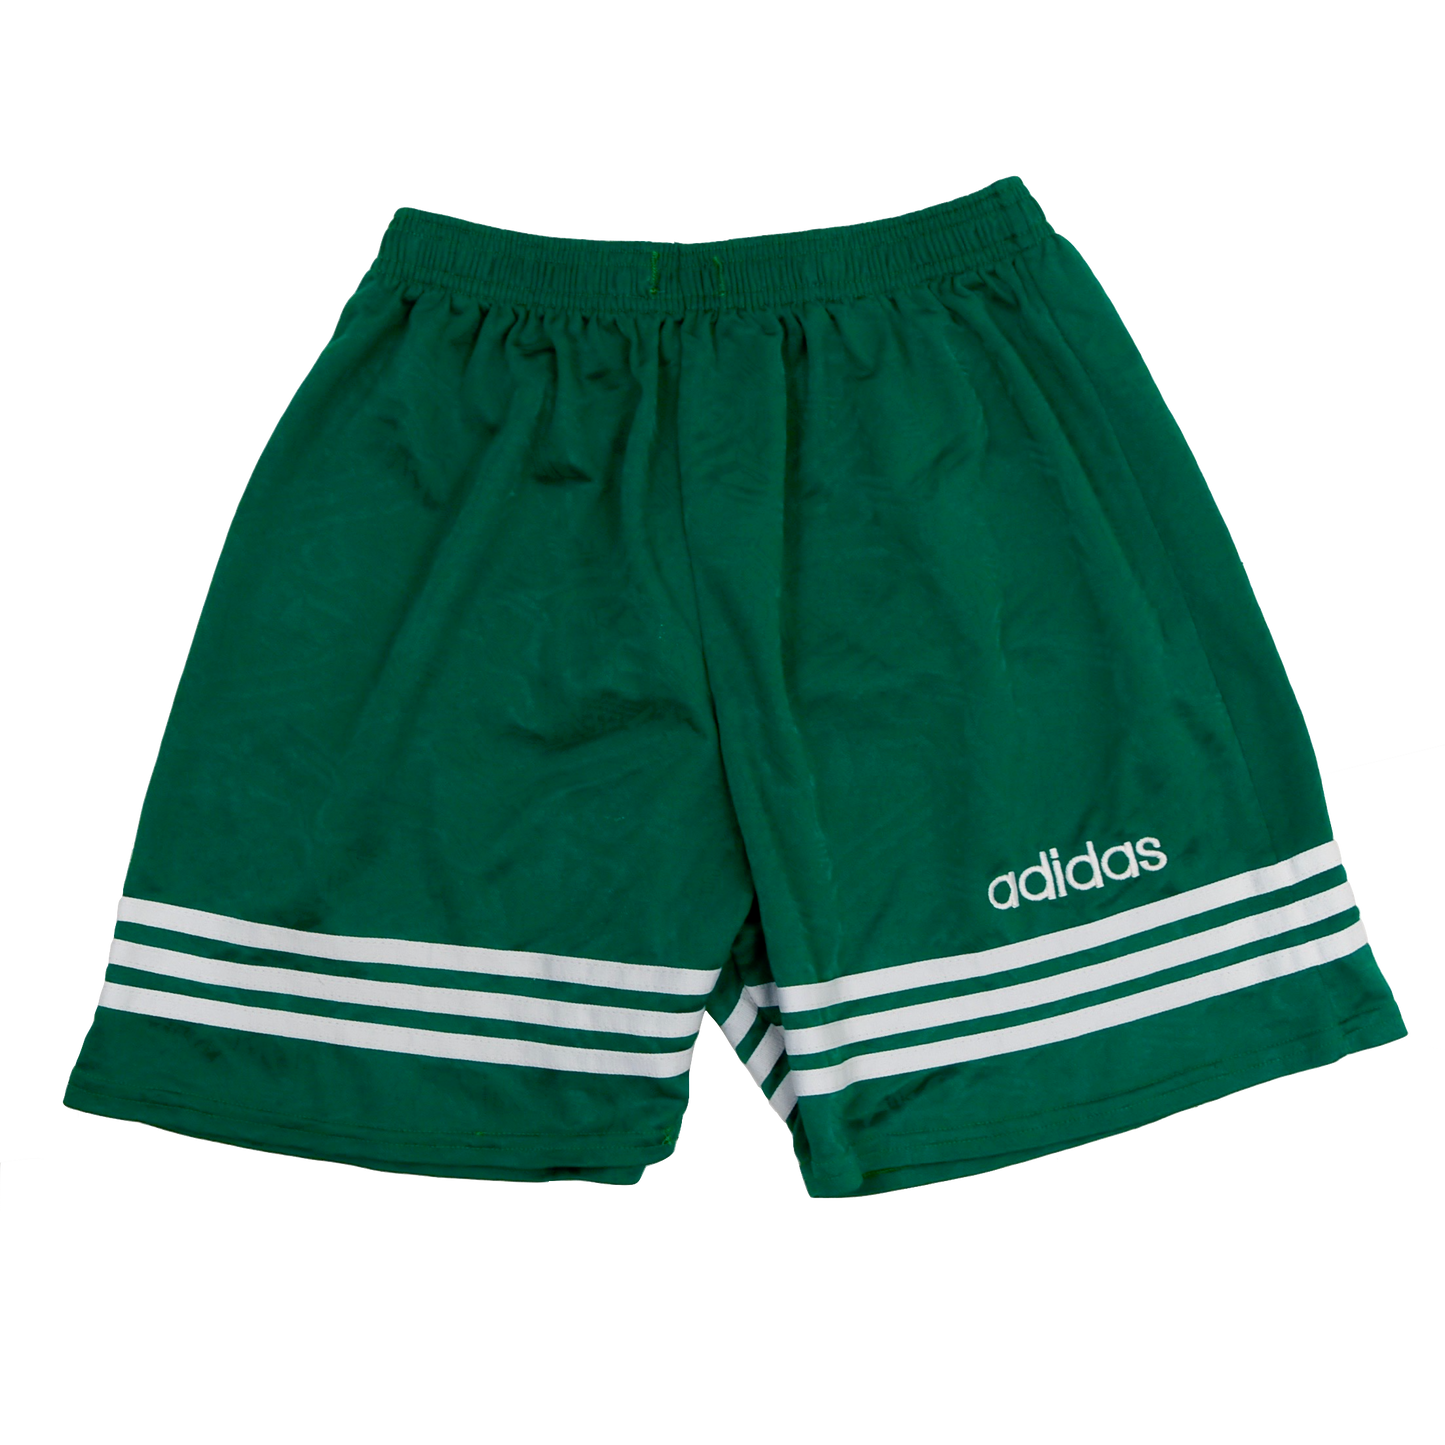 Vintage Adidas Jacquard Shorts Größe D8/US L - grün